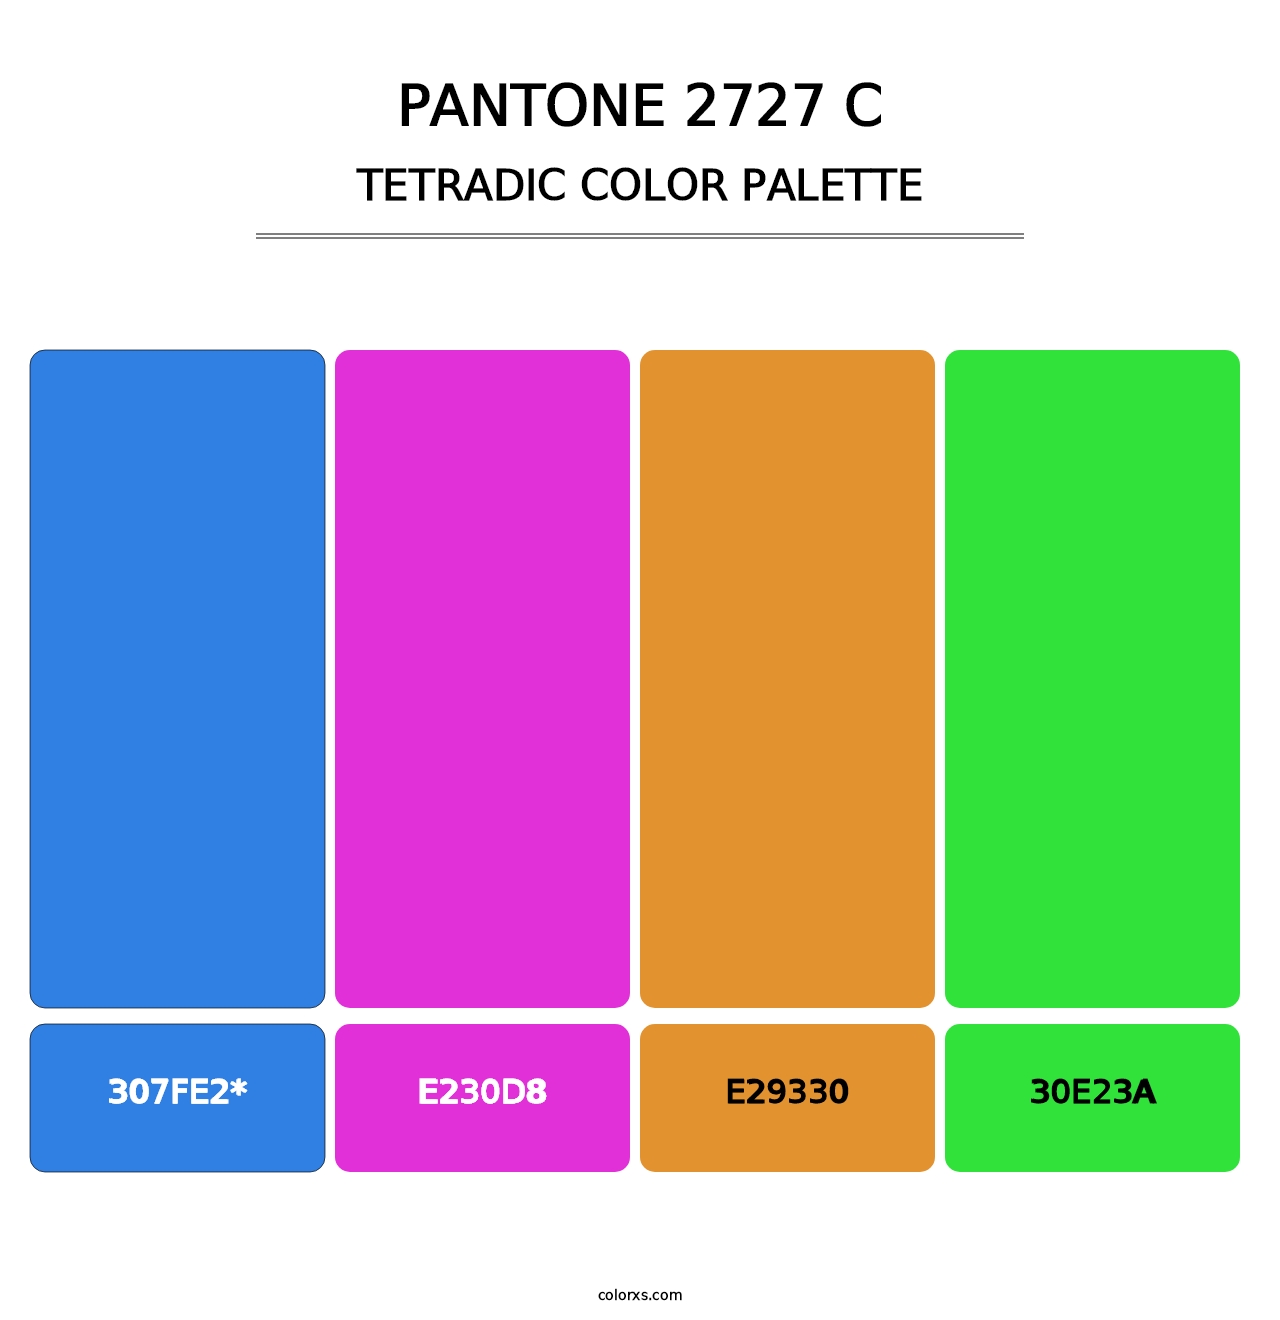 PANTONE 2727 C - Tetradic Color Palette